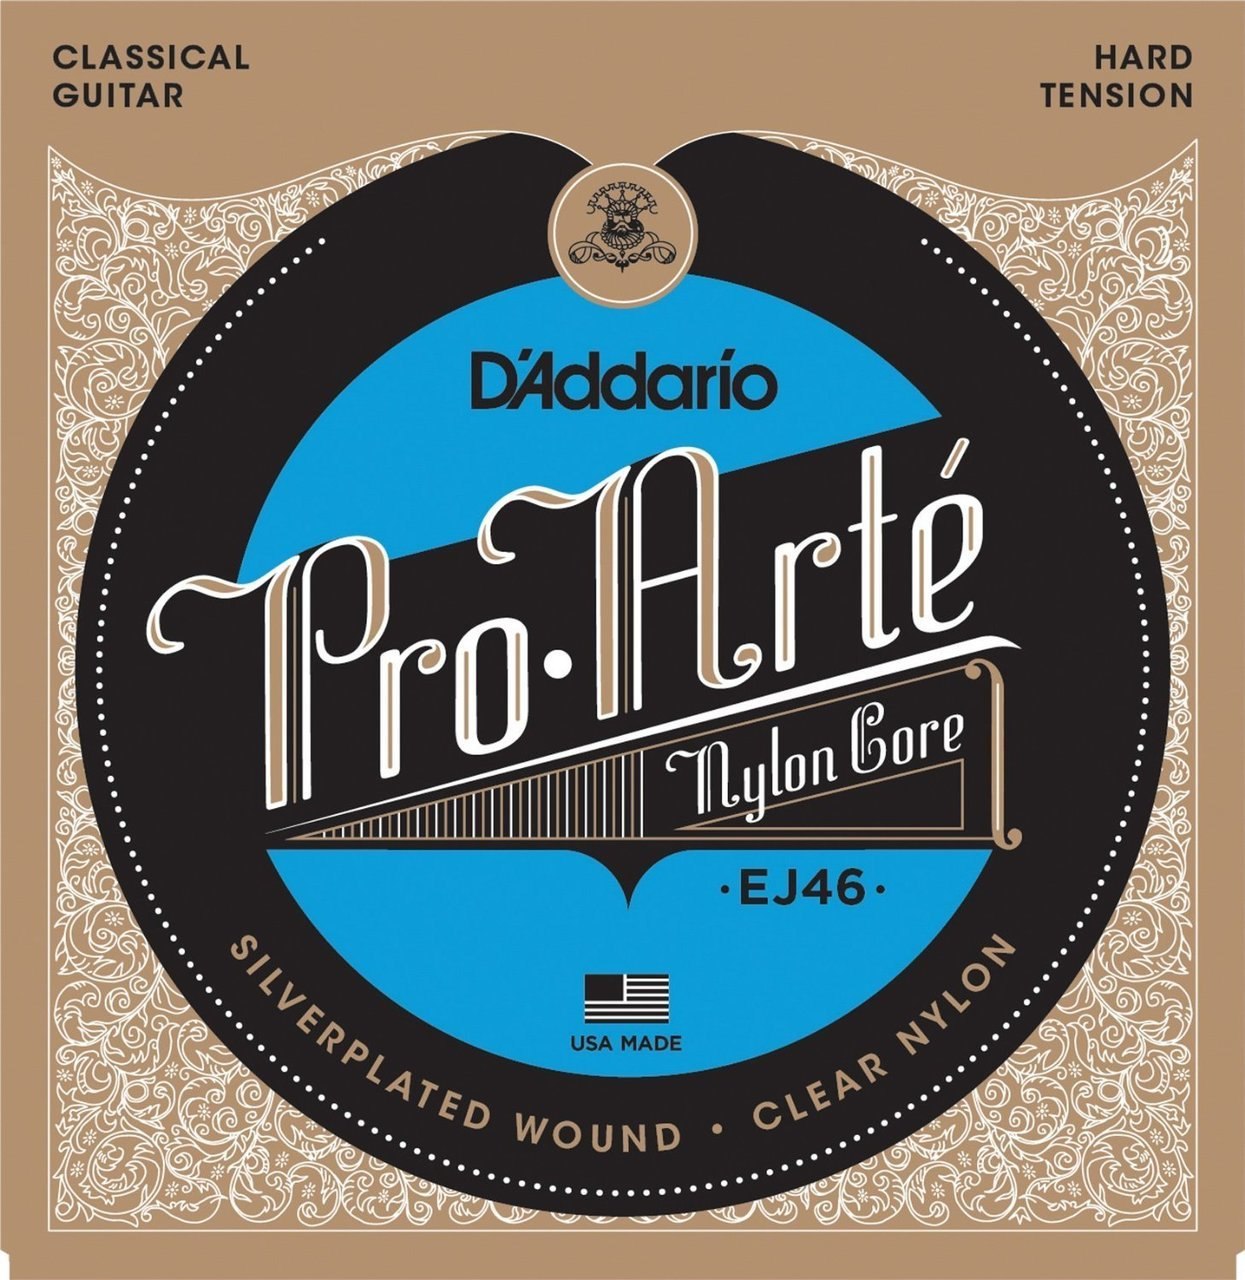 D'Addario Pro Arte EJ46  Nylon Core Classical Hard Tension Guitar String Set